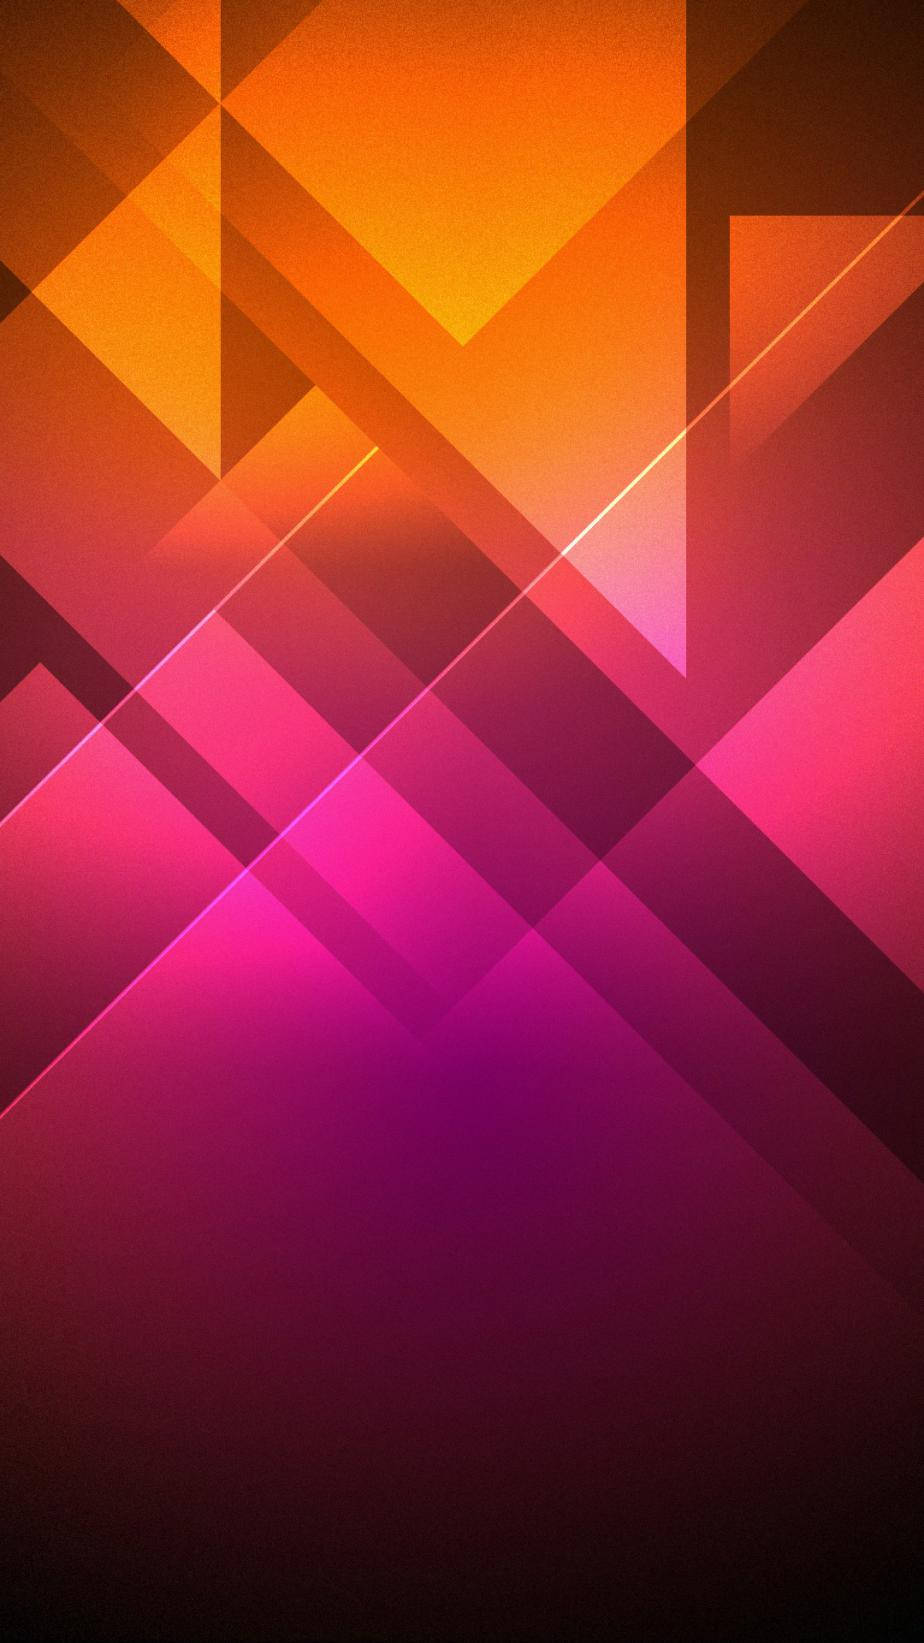 Htc Orange And Pink Geometric Shapes Background